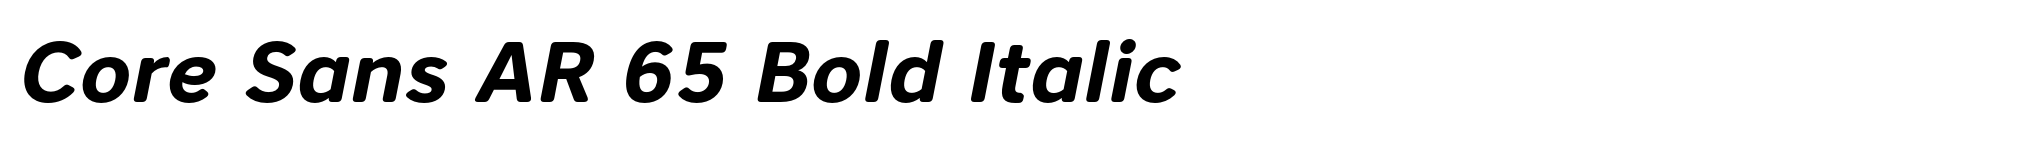 Core Sans AR 65 Bold Italic image